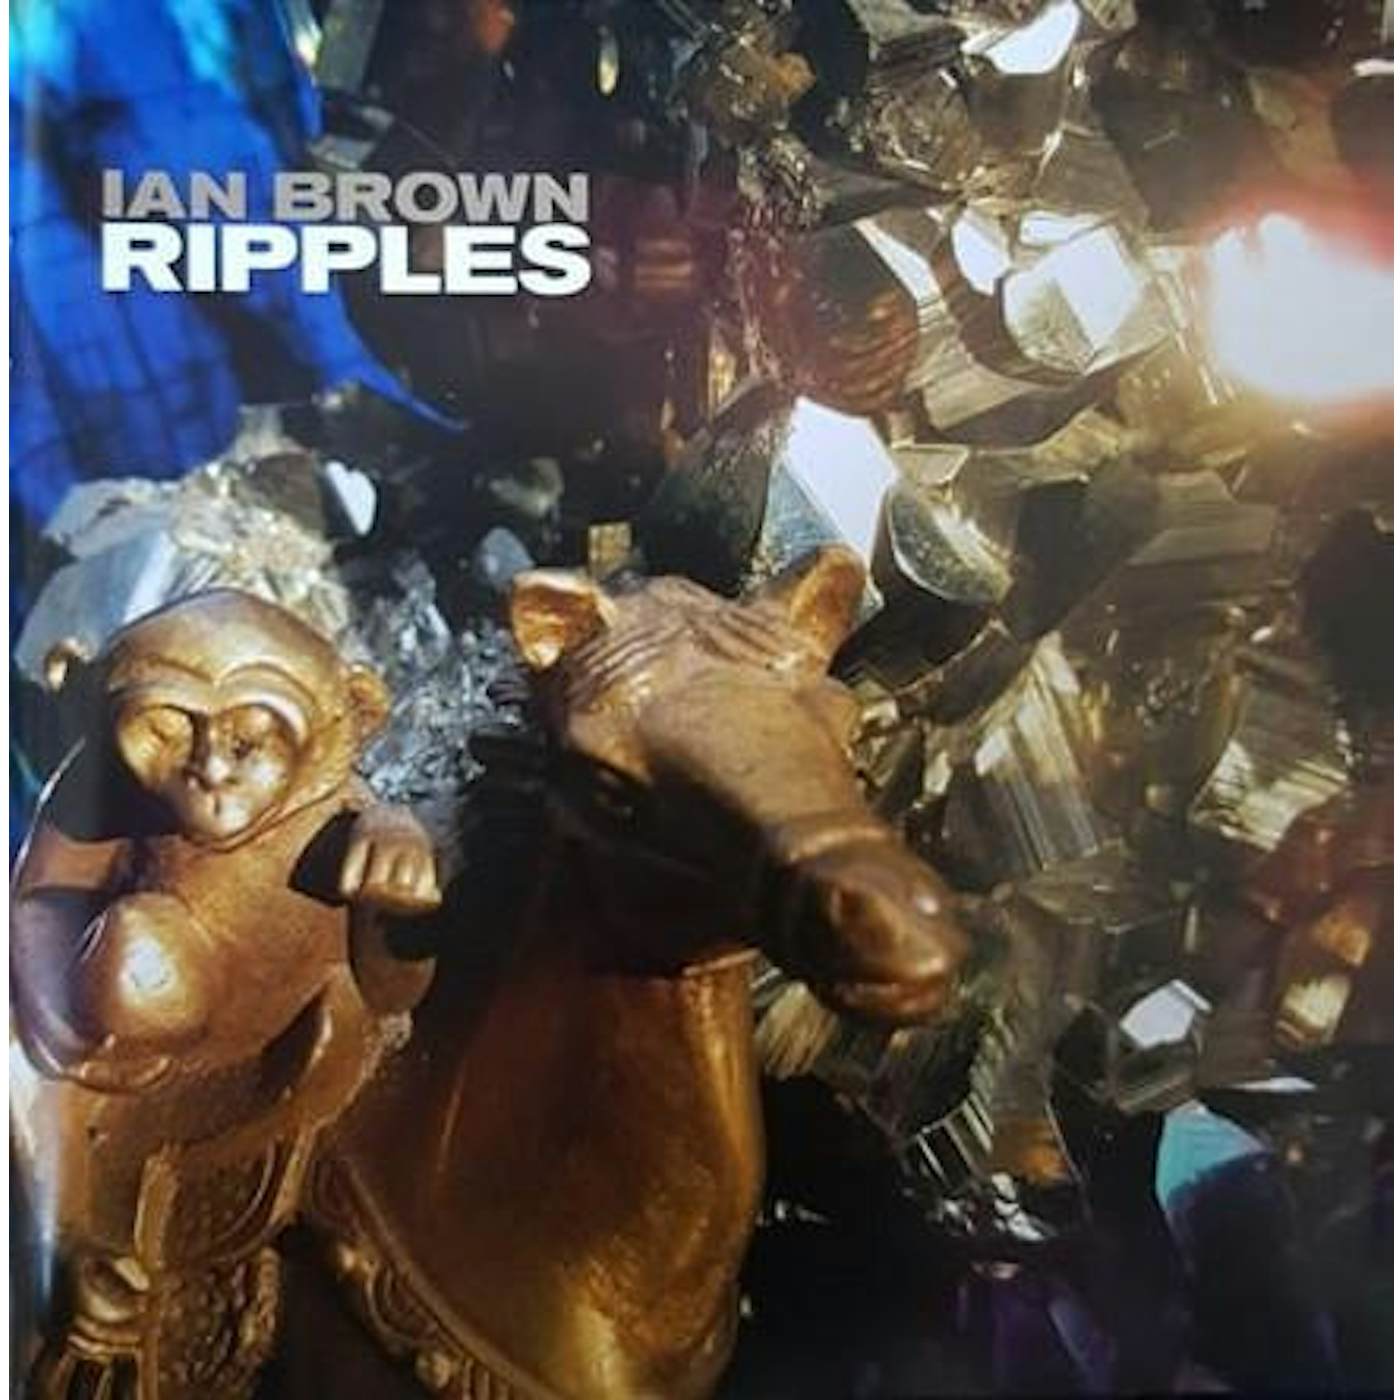 Ian Brown RIPPLES CD